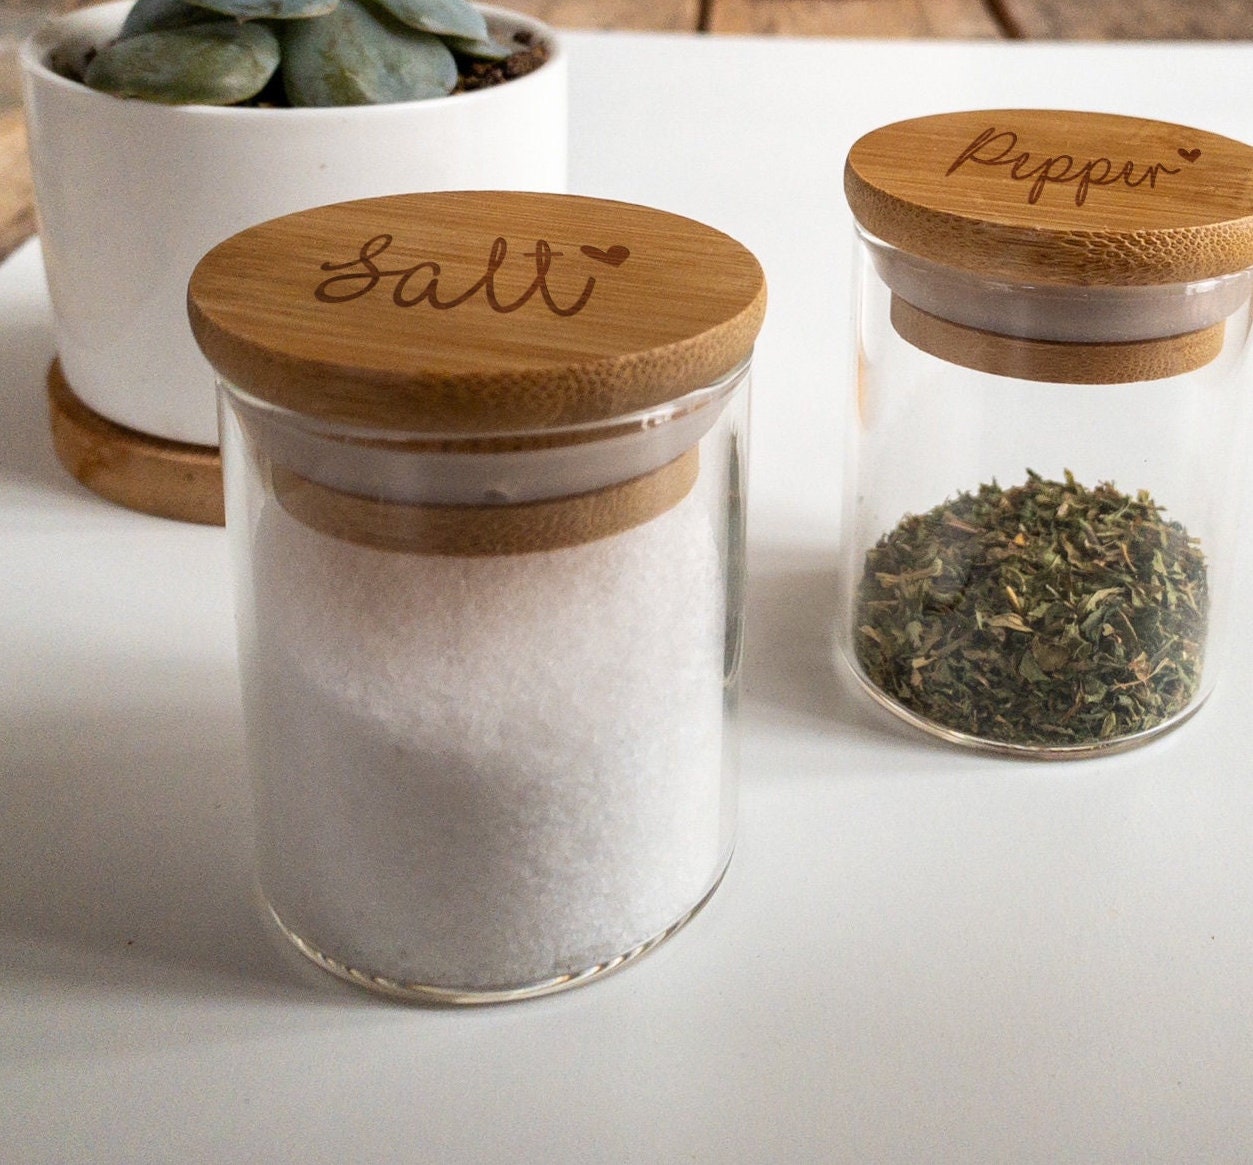 Bamboo Spice Jars, Spice Jars, Wooden Lid Spice Jars, Glass Spice